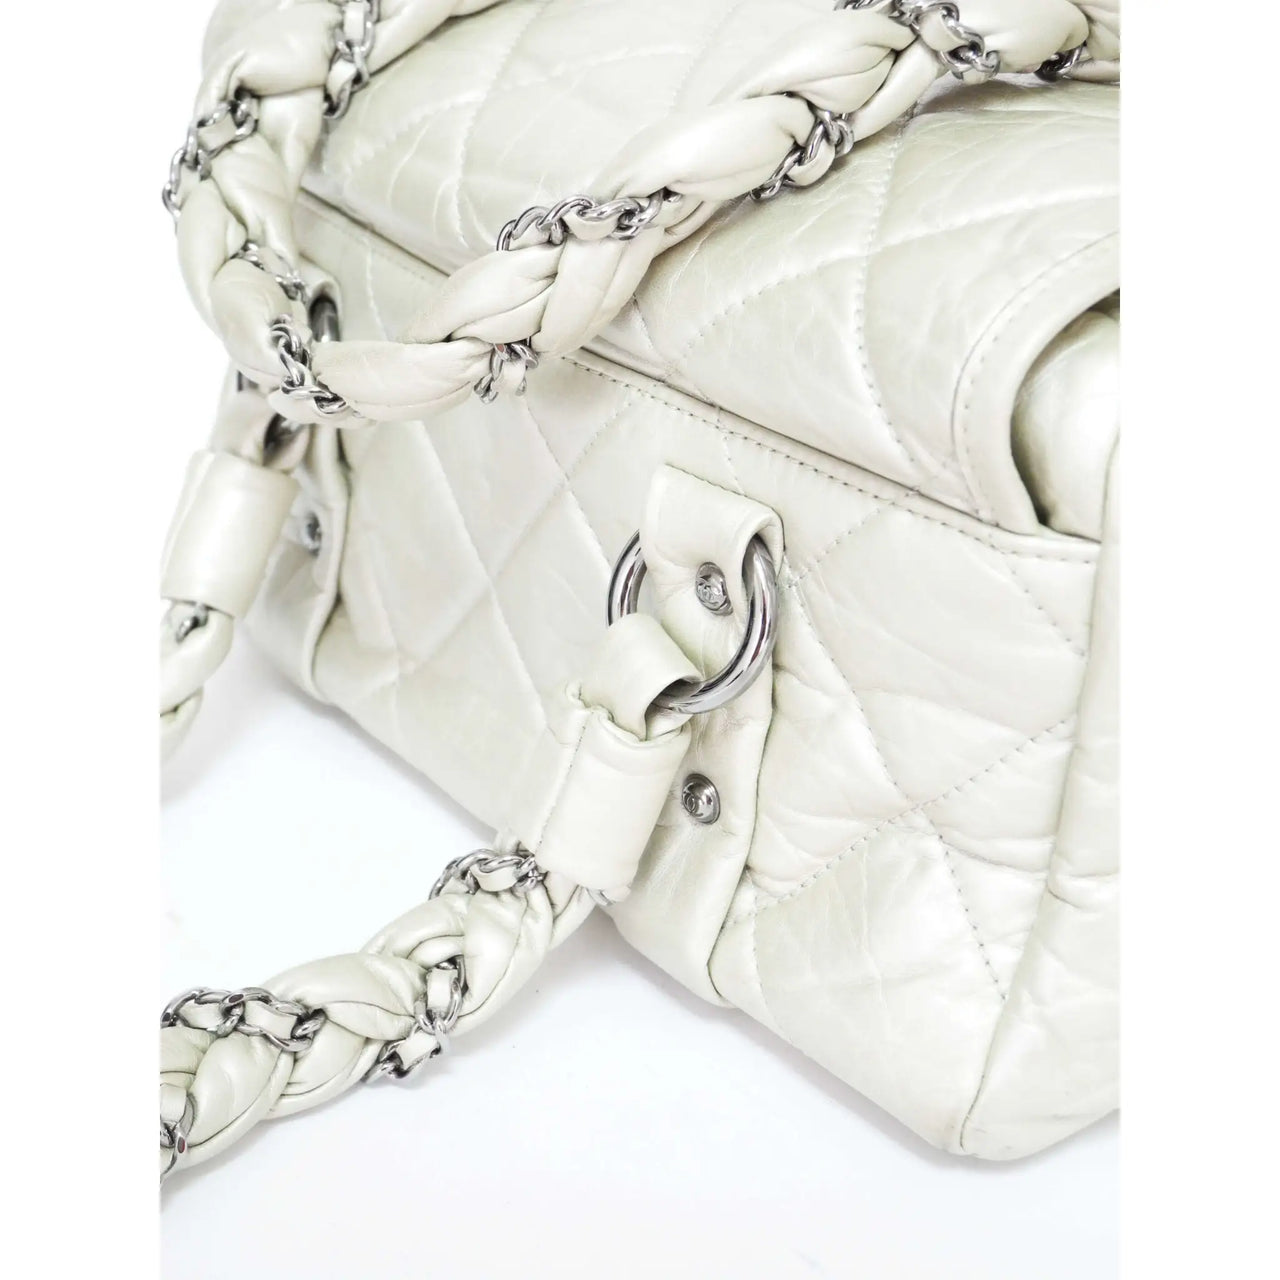 medium classic handbag chanel